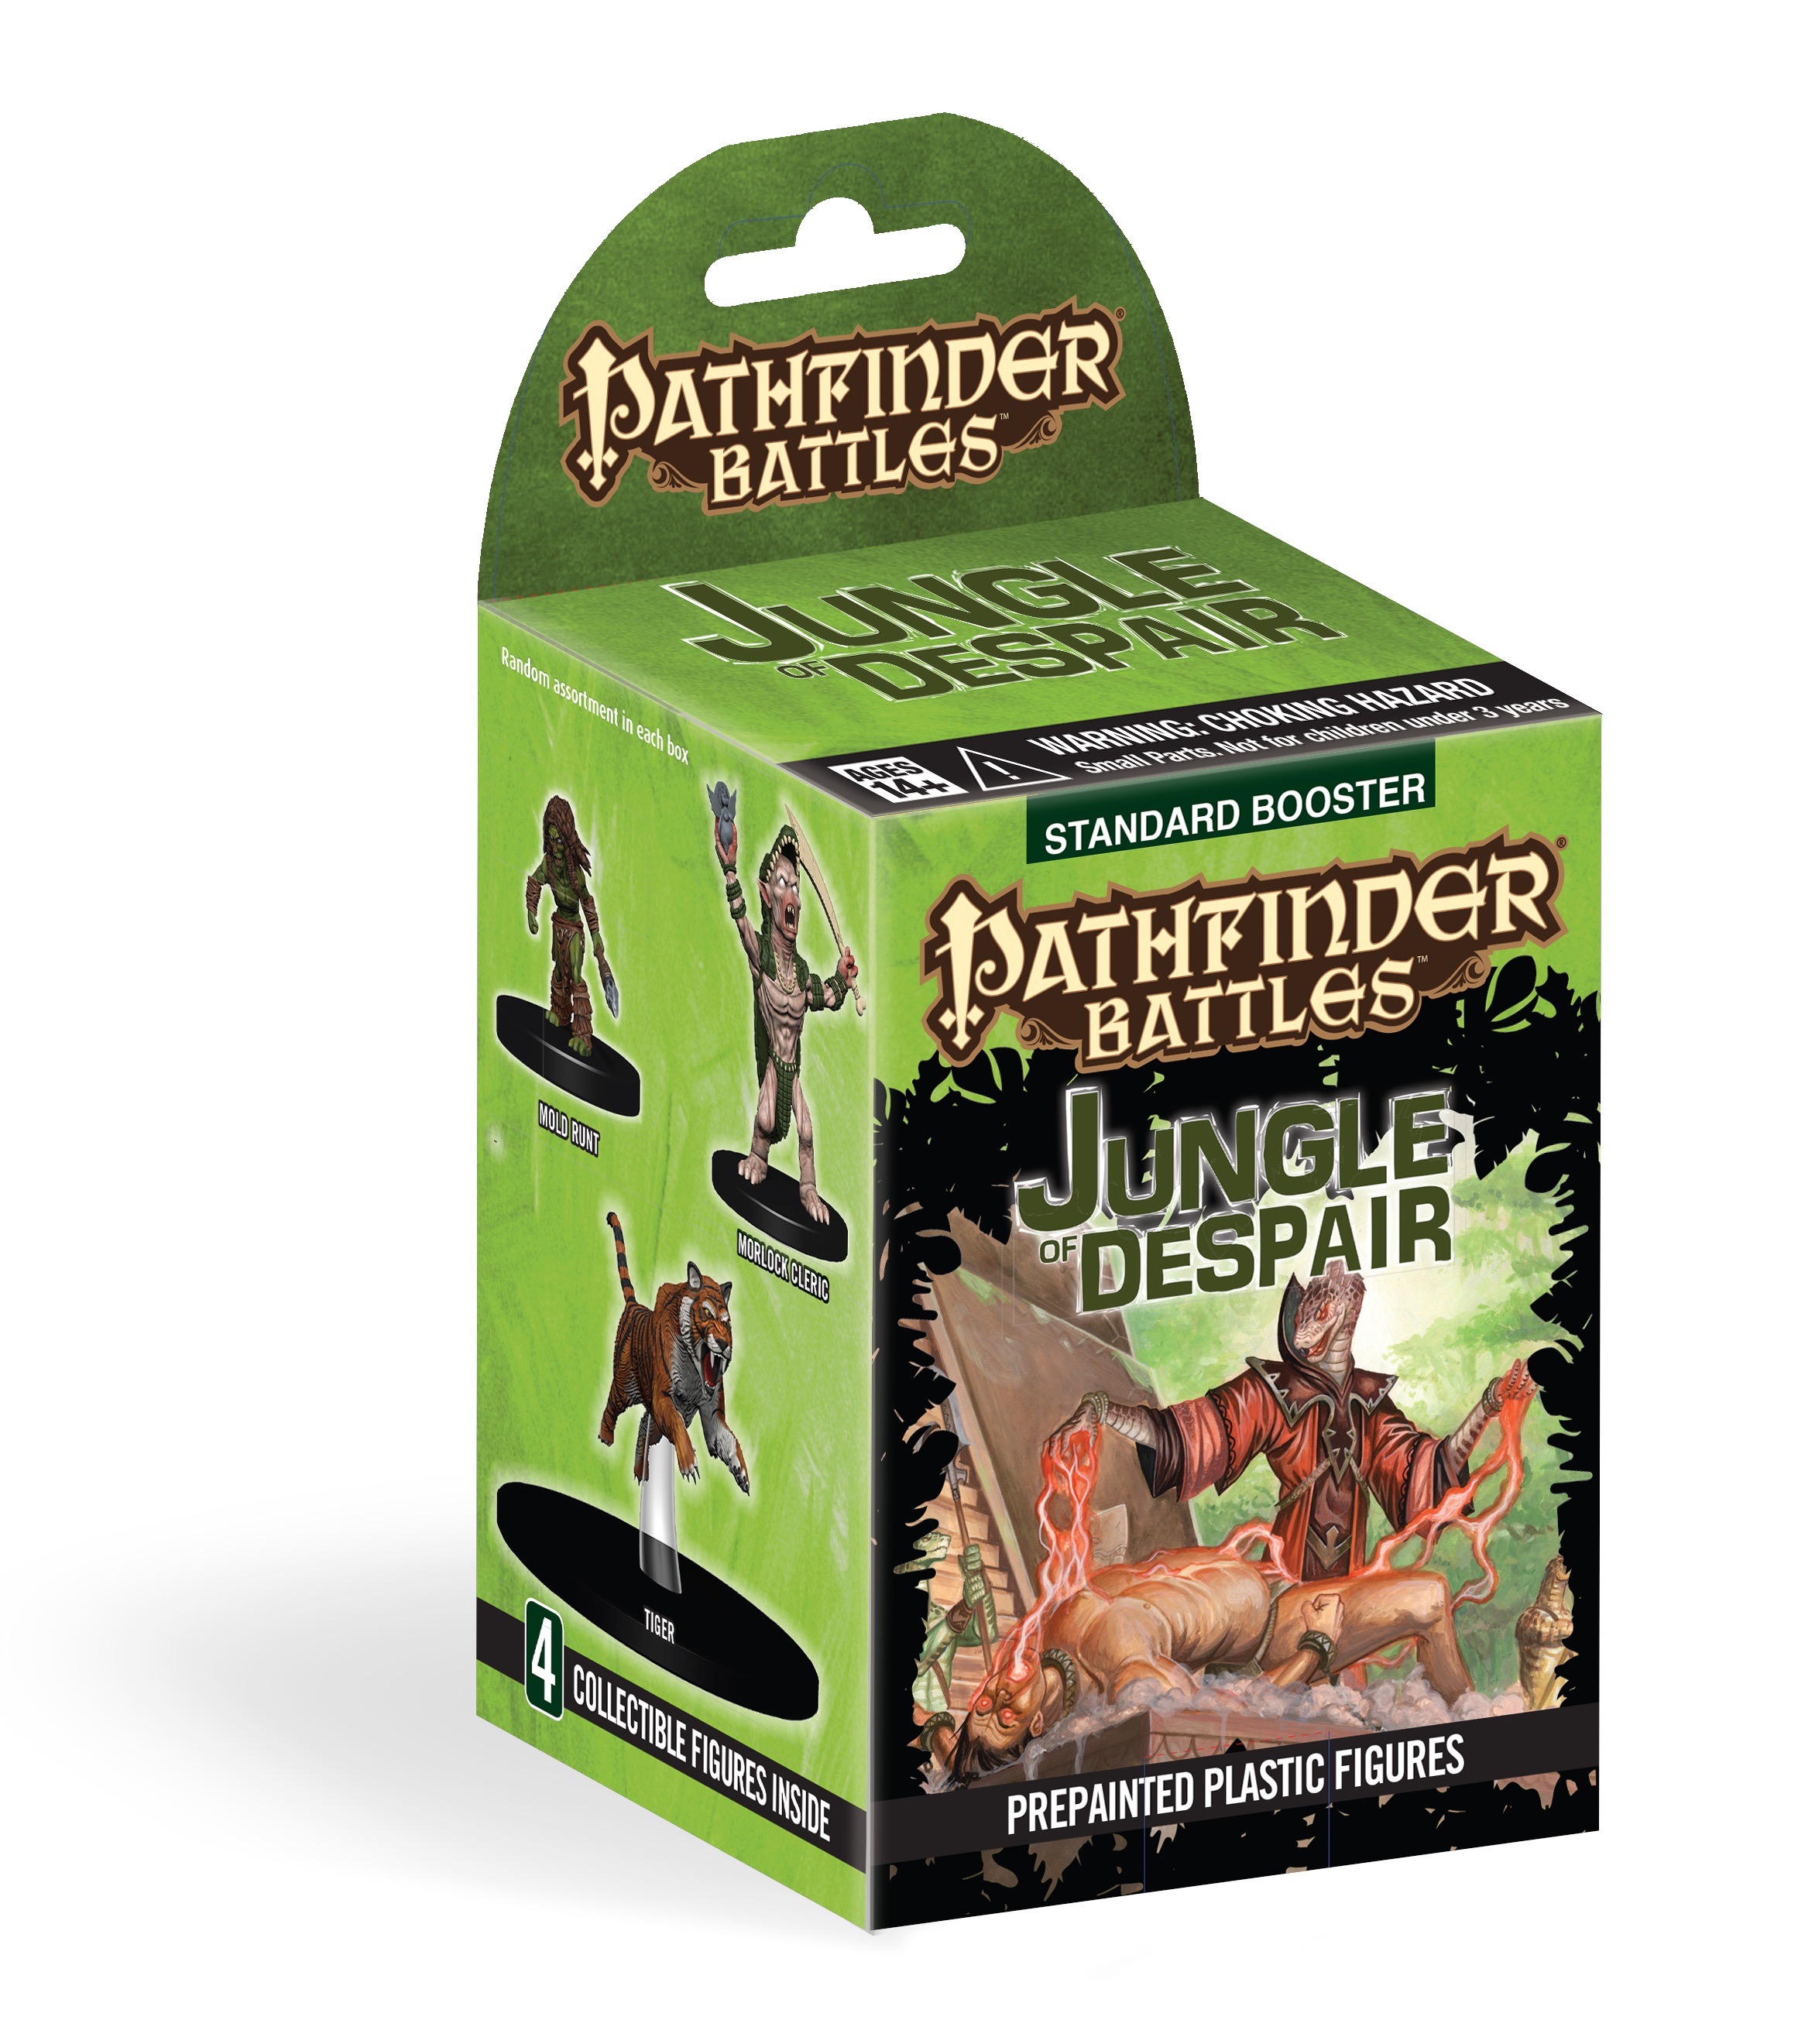 Box mock up for Pathfinder Battles: Jungle of Despair miniatures